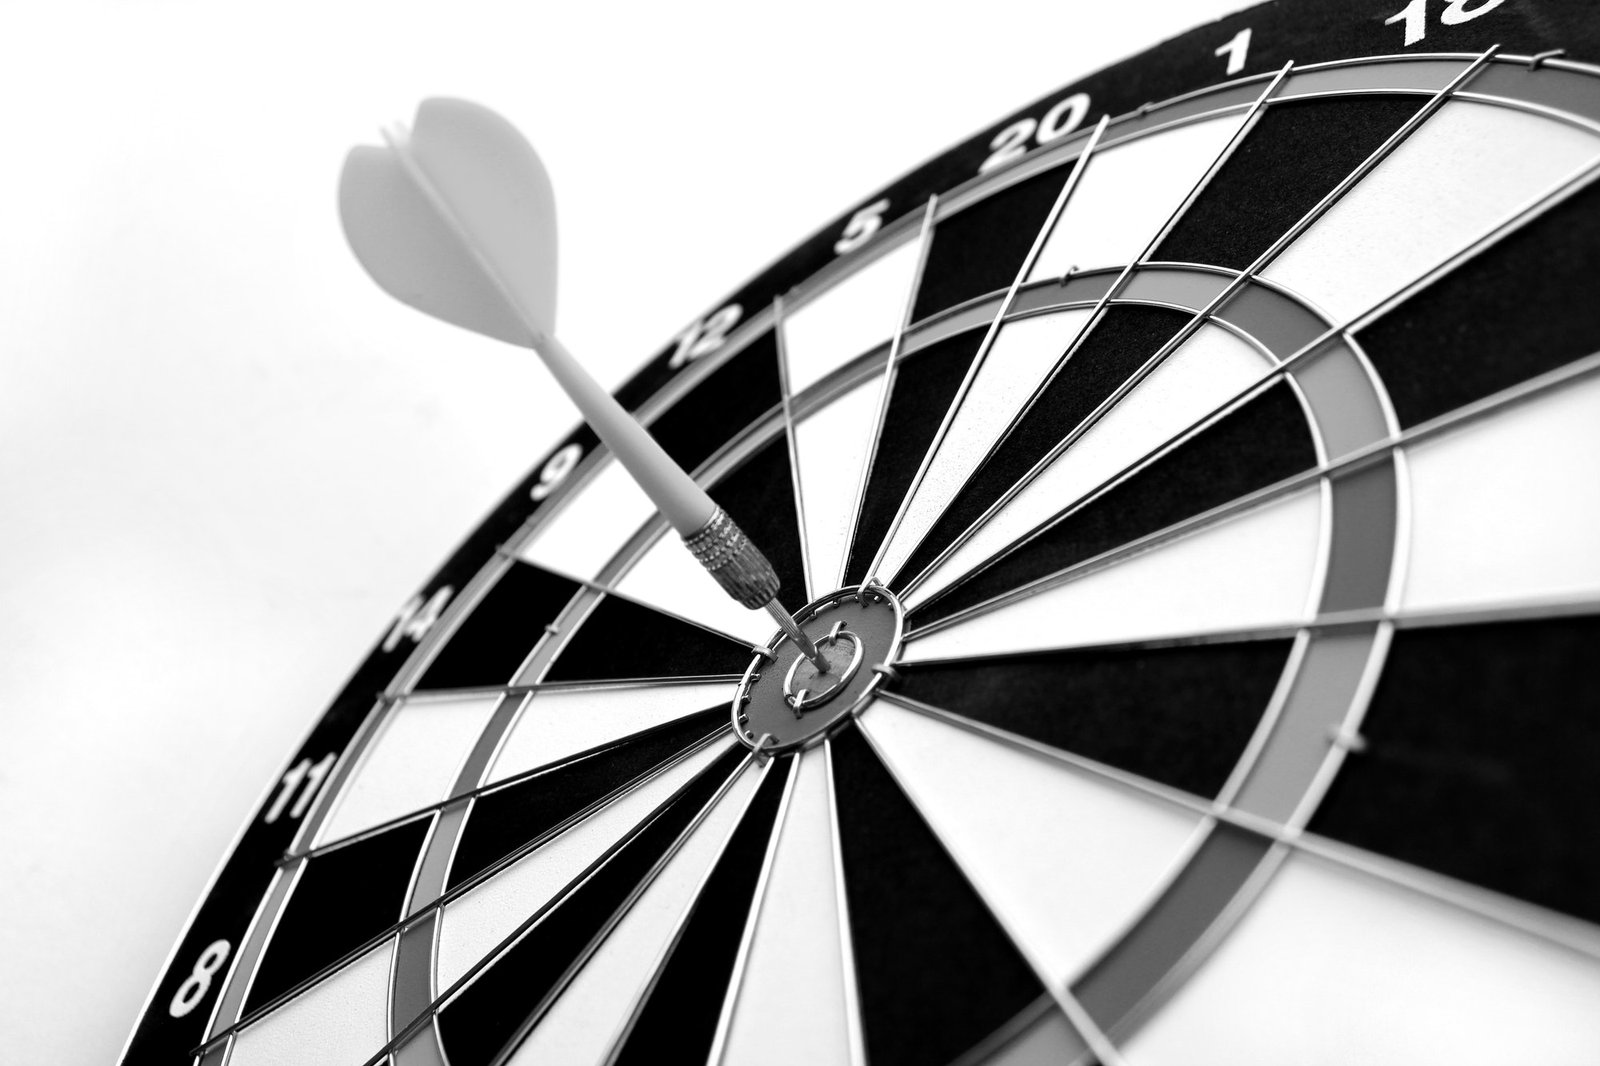 Darts - bullseye - target practice - target marketing - business concepts